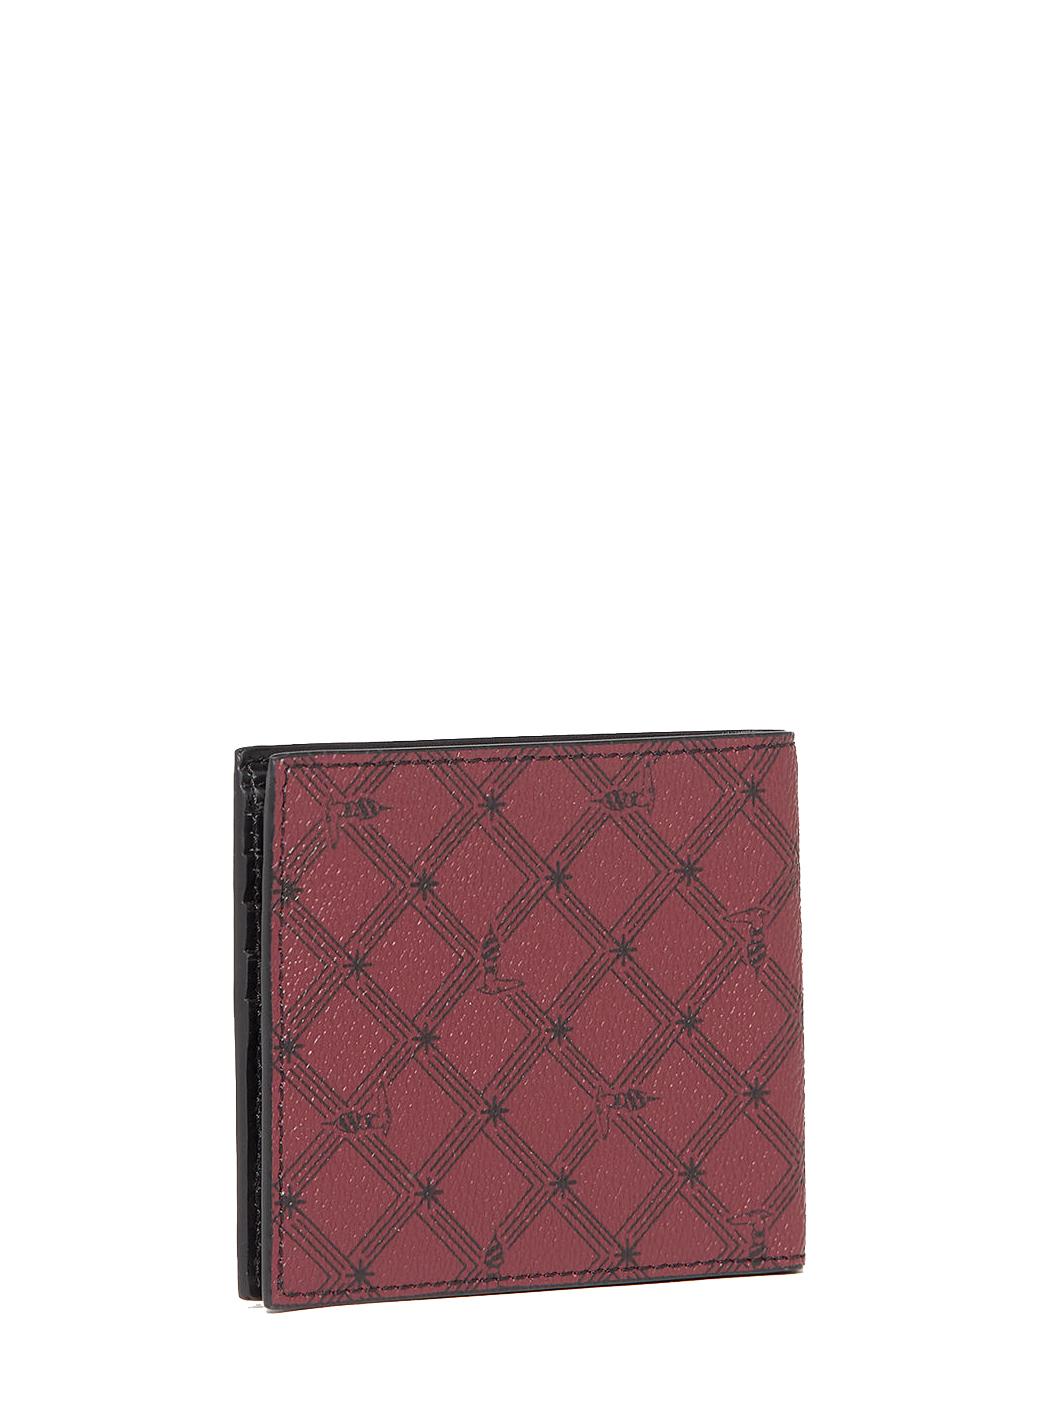 Trussardi Monogram Architectural Men's Wallet Red / Black - Buy At Outlet  Prices!